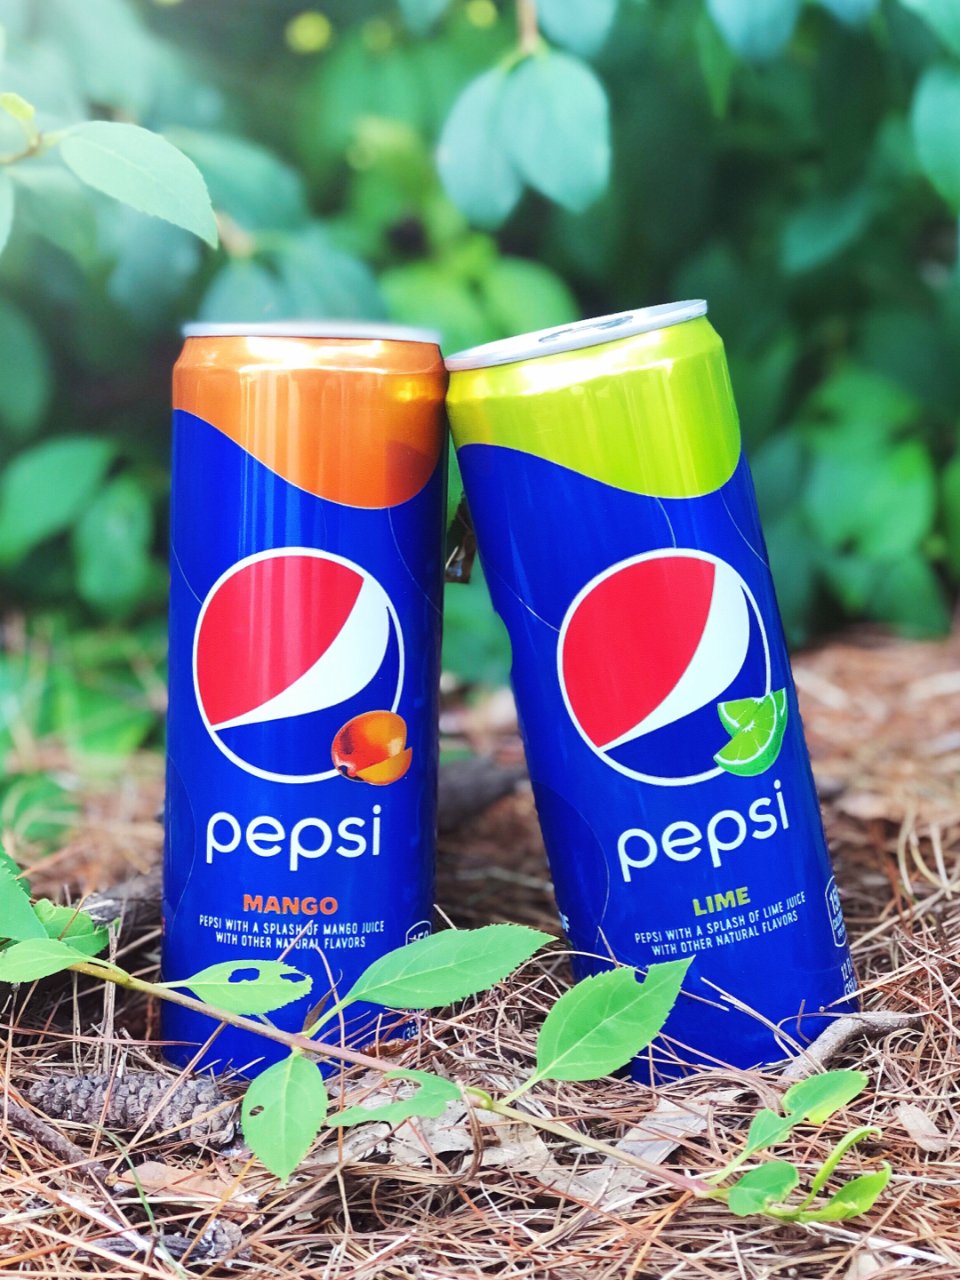 Pepsi 百事,Mango Pepsi,Lime Pepsi,青柠味,芒果味